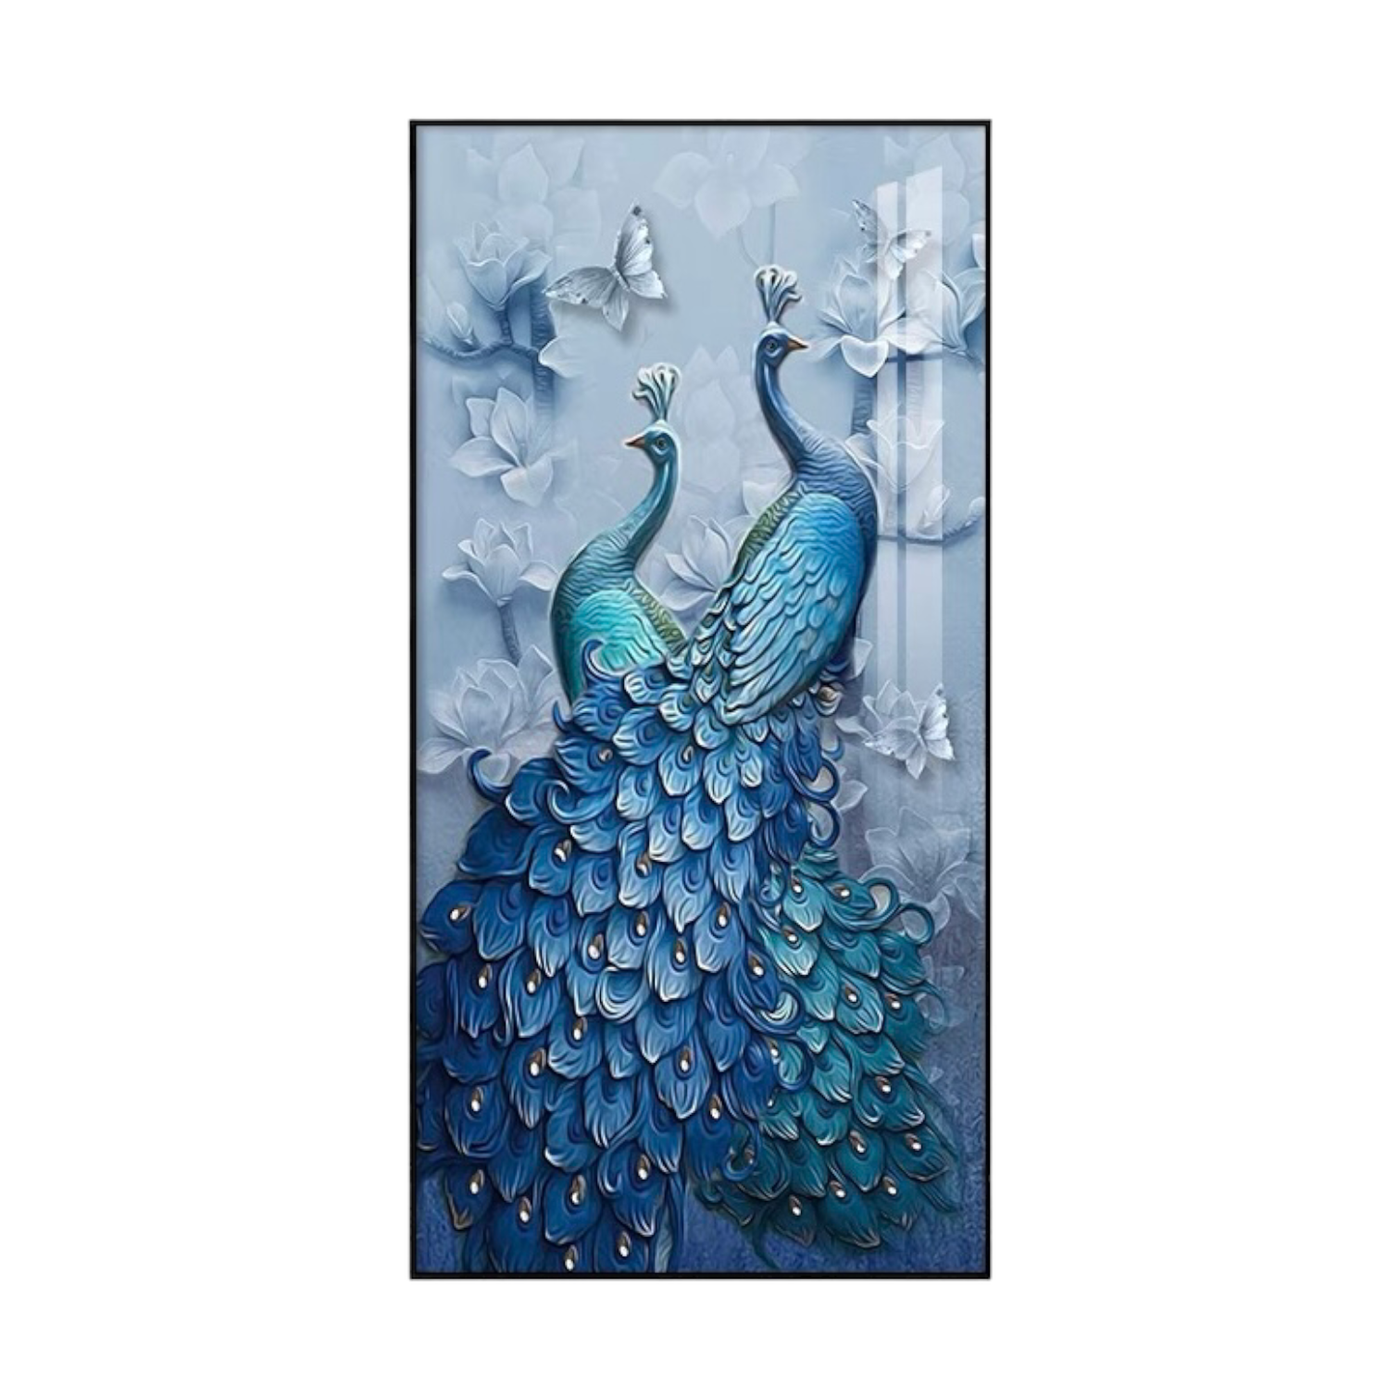 Two Blue Peacocks Crystal Wall Art